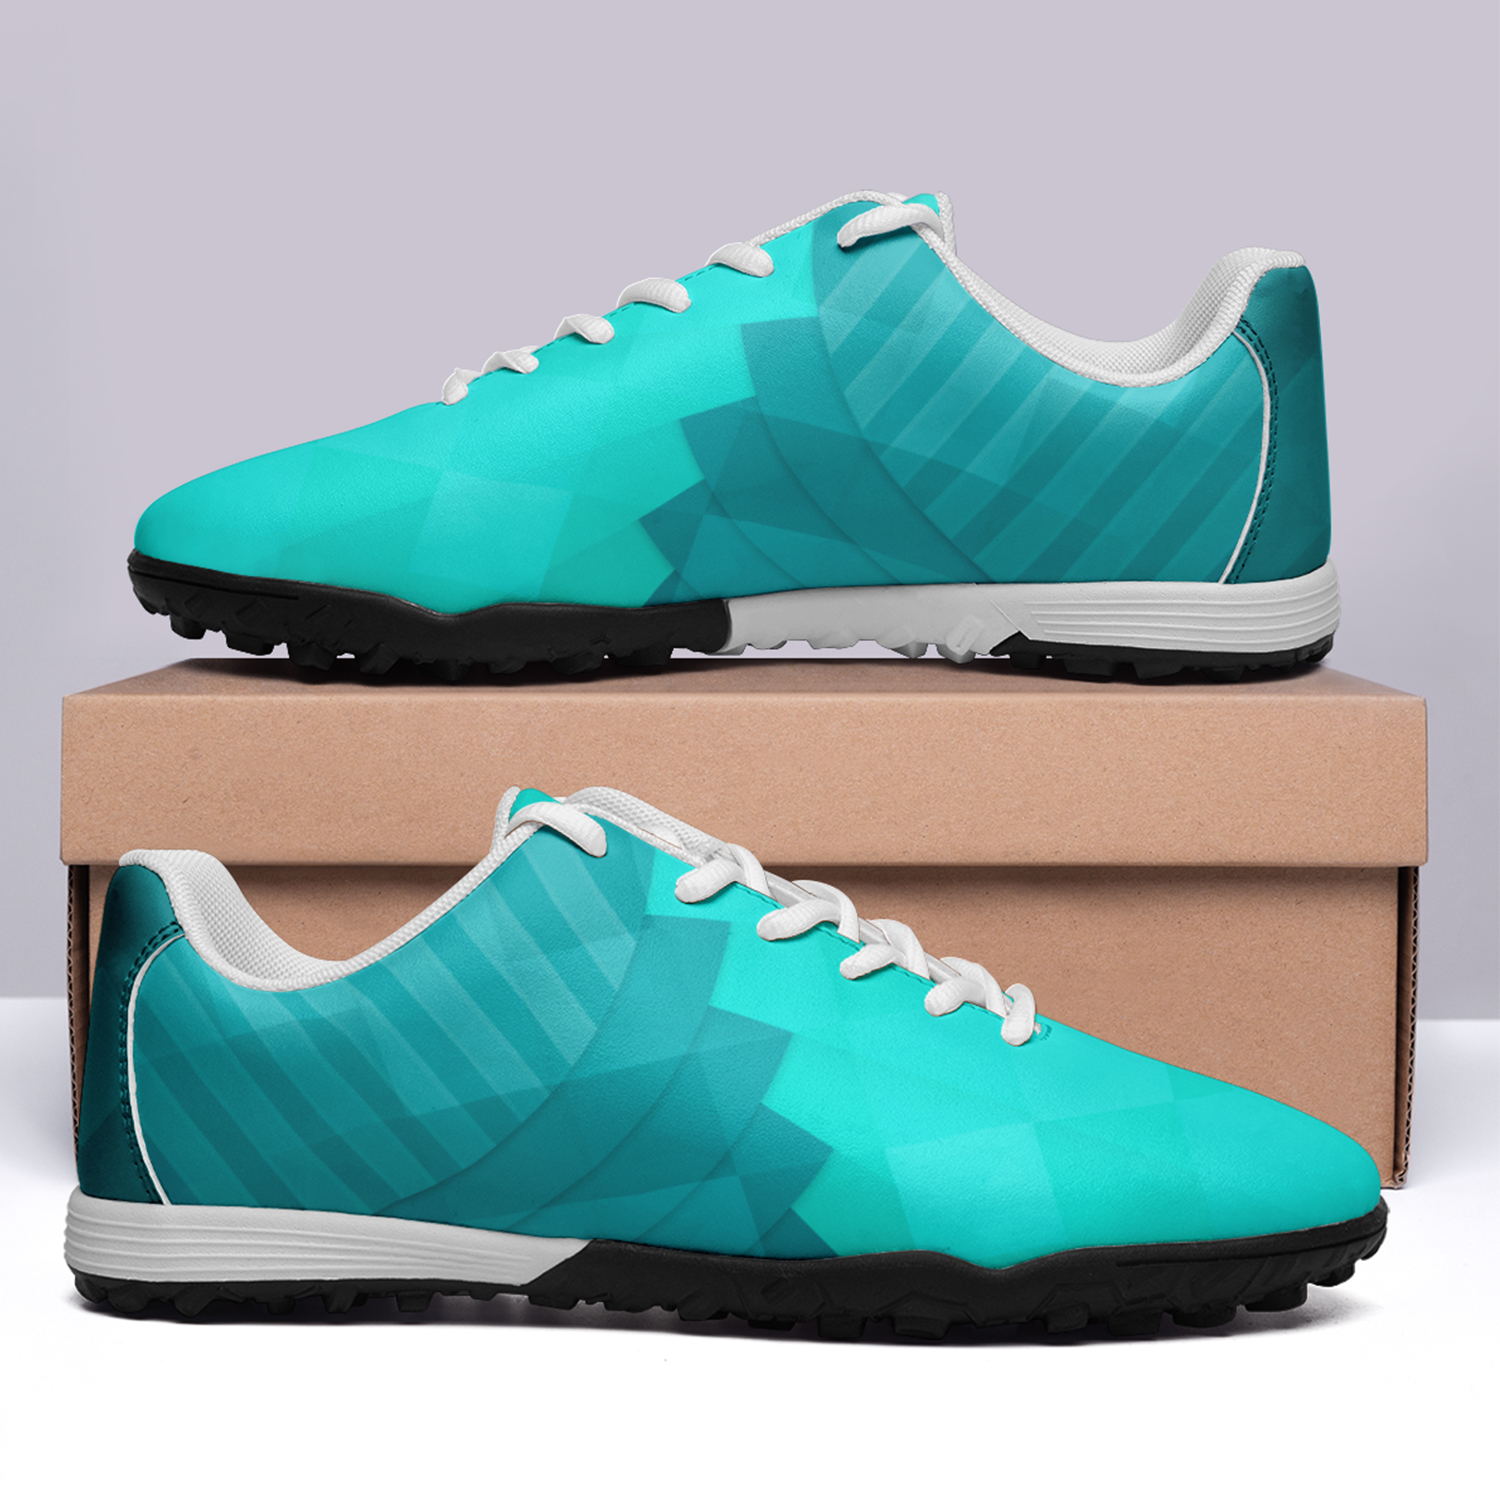 Custom Croatia Team Soccer Shoes Personalized Design Printing POD Football Shoes